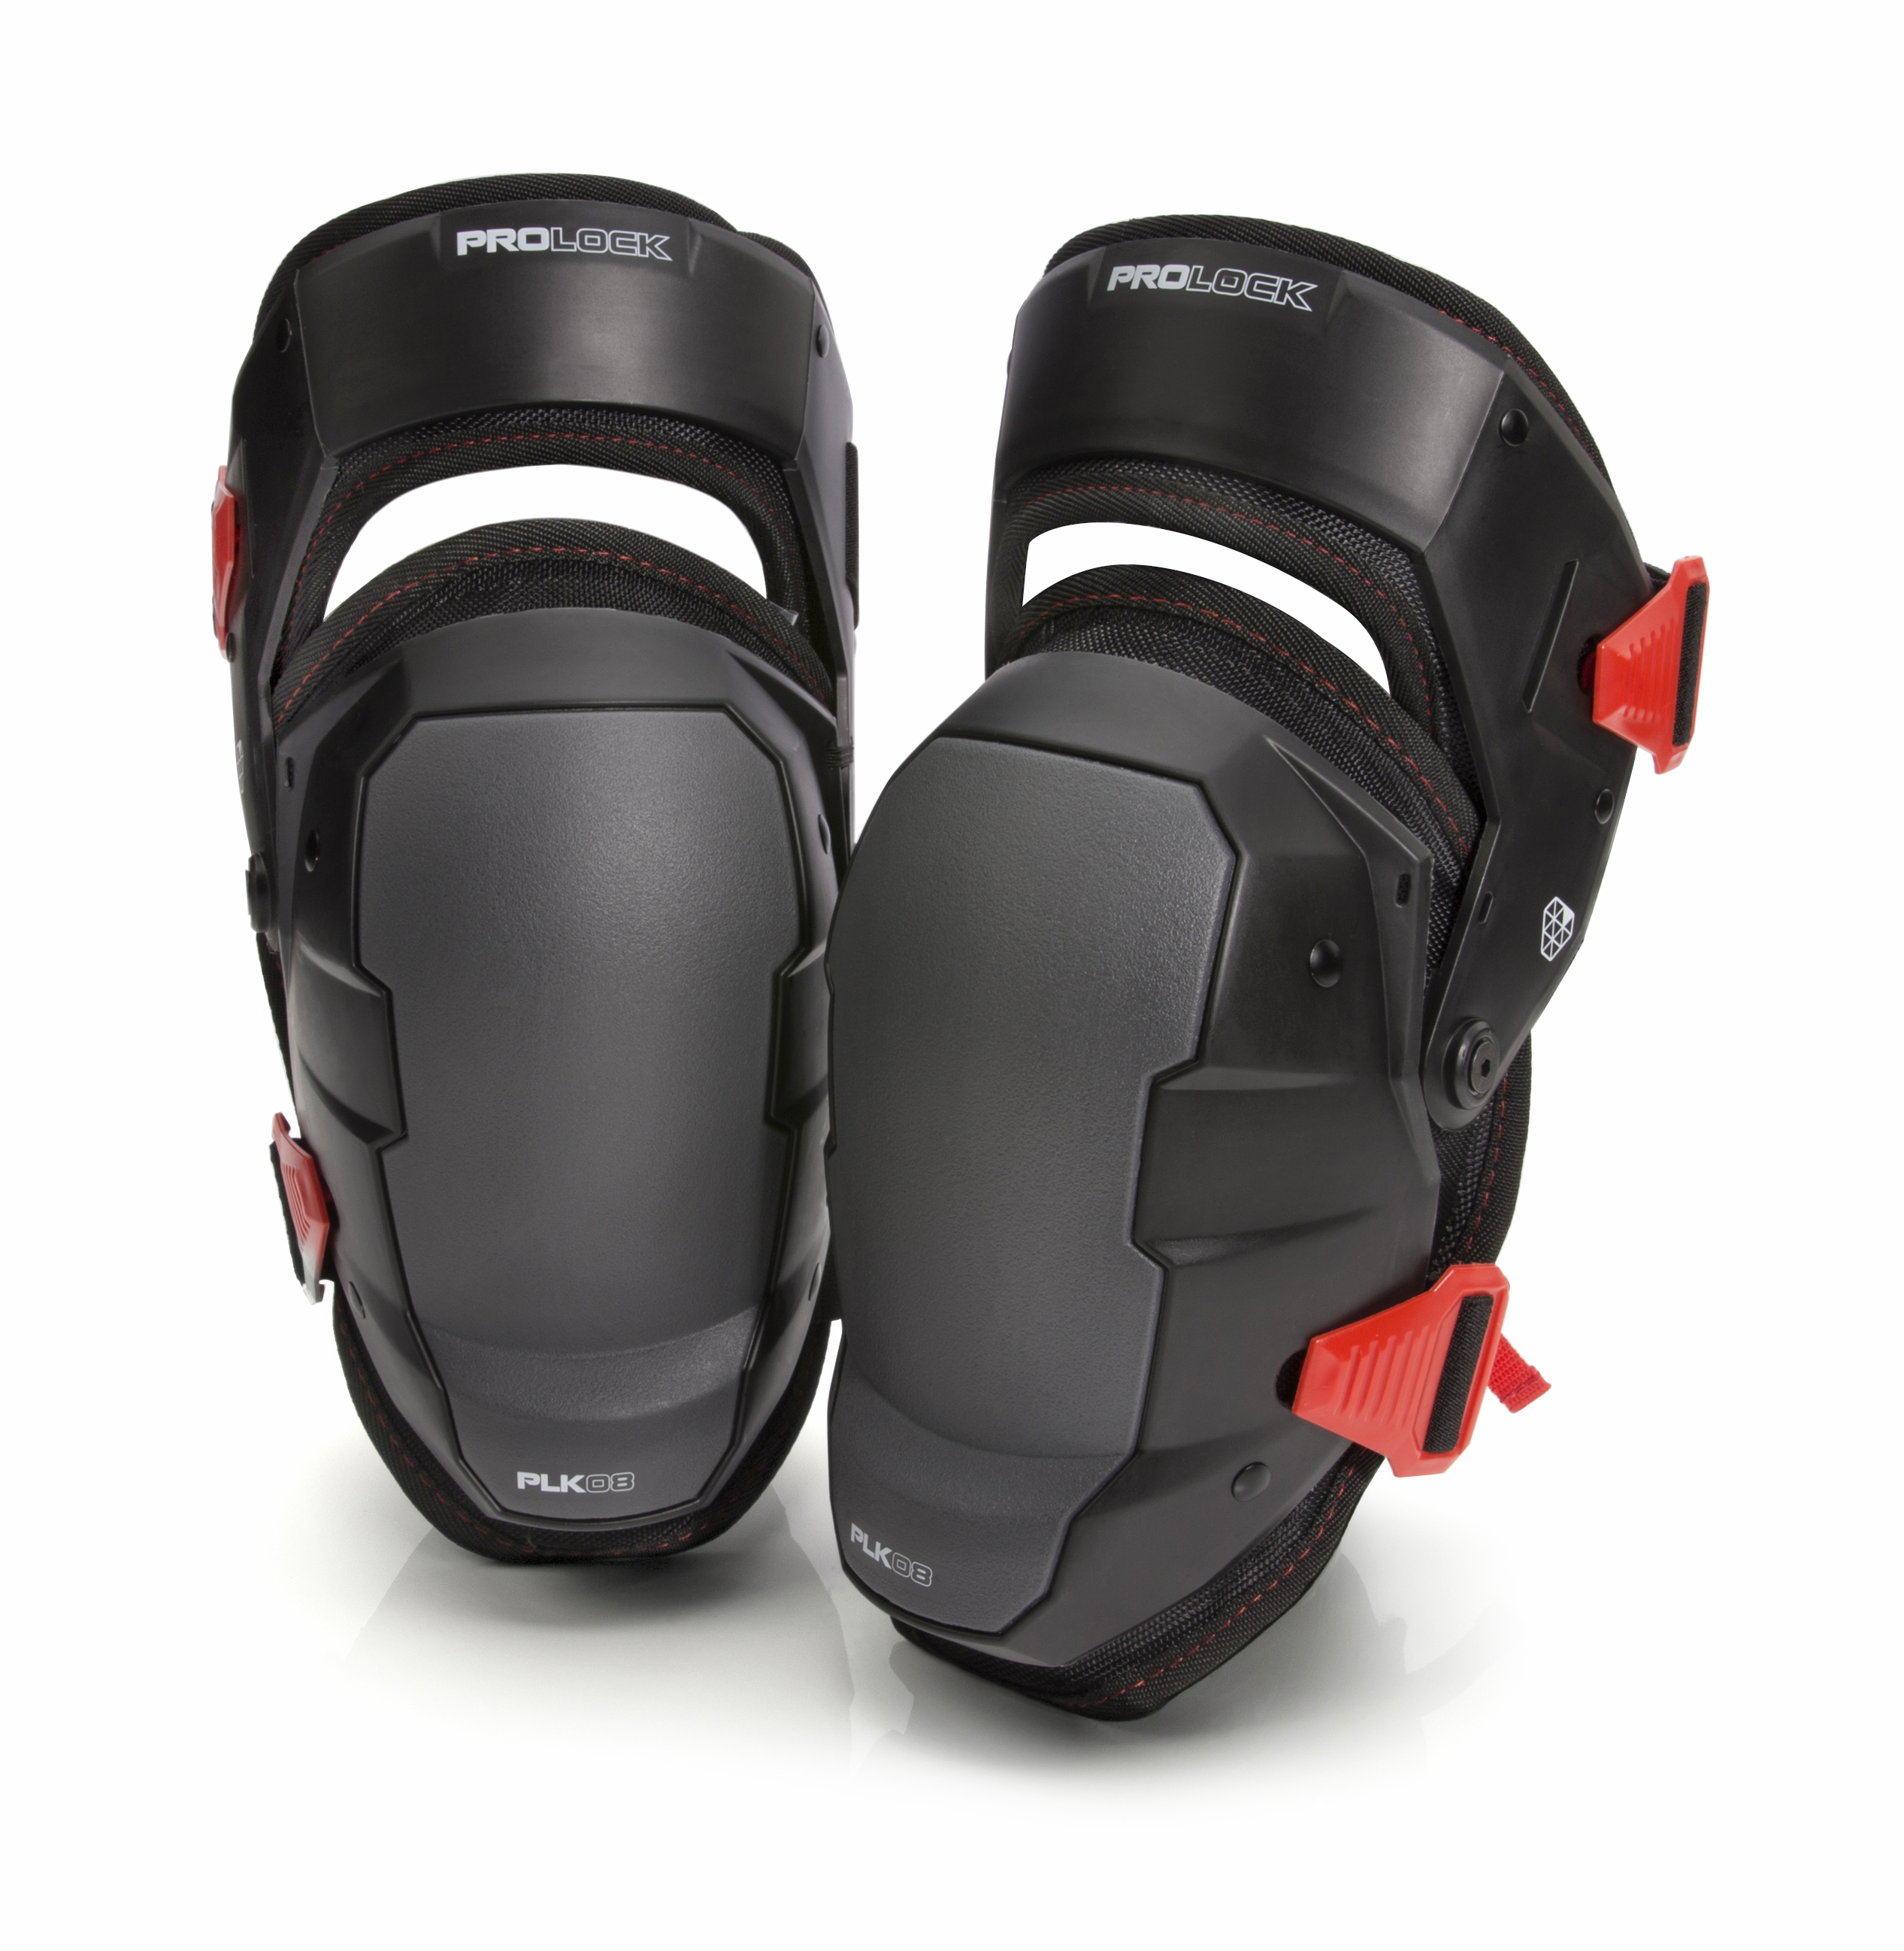 Prolock Professional Construction Gel Comfort Knee Pads Plus PLK08 | eBay